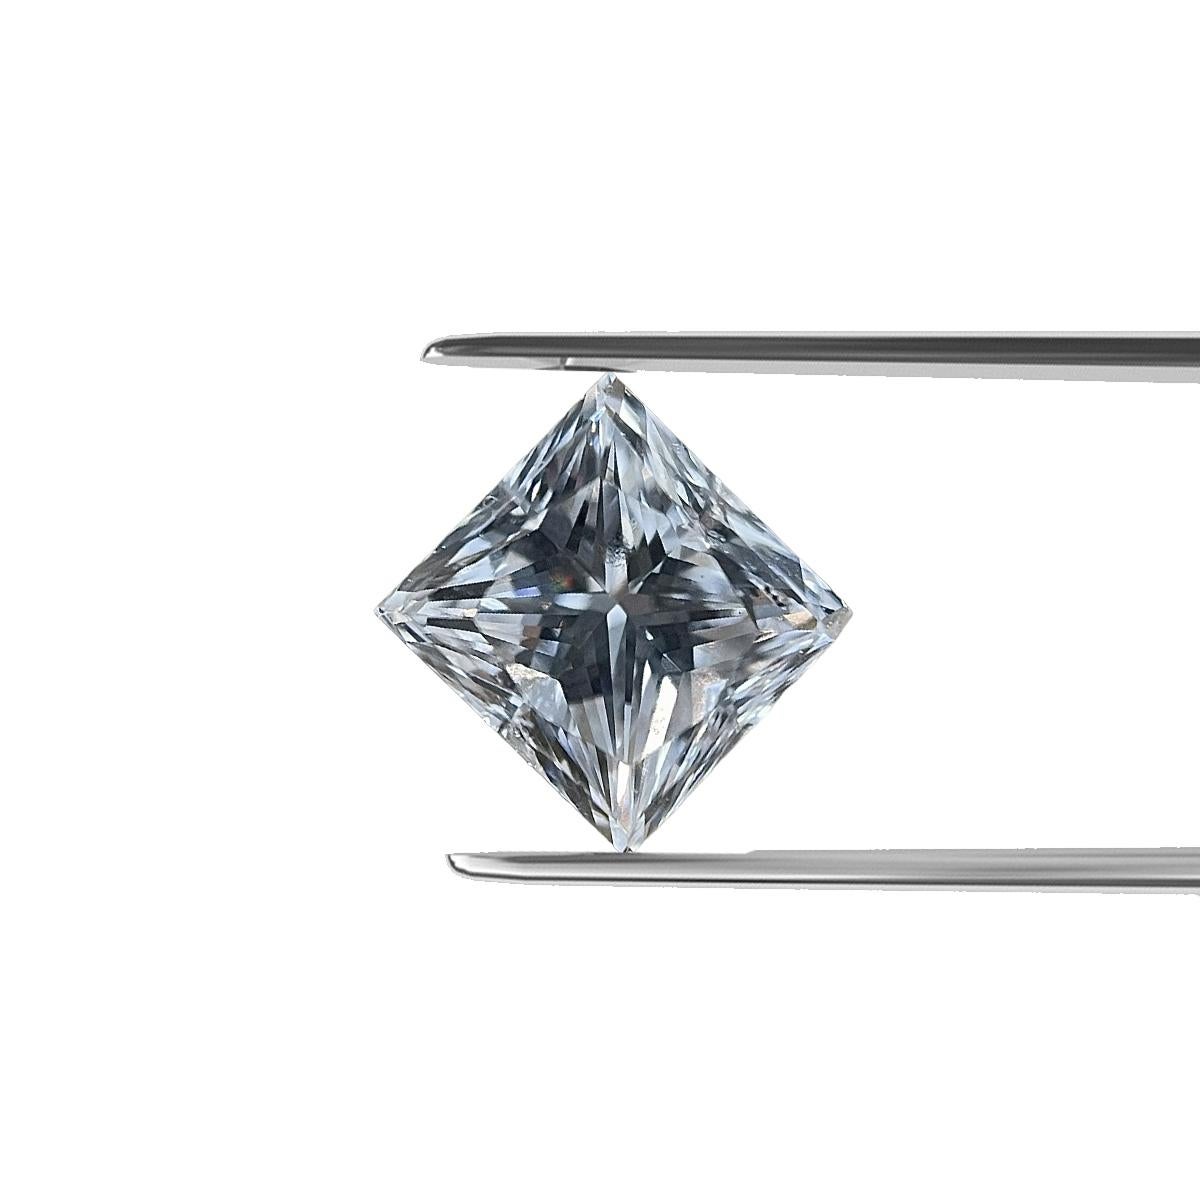  ITEM DESCRIPTION

ID #: NYC57055
Stone Shape:	PRINCESS CUT DIAMOND
Diamond Weight: 1.01ct
Clarity: VS2
Color:F
Cut:	Excellent
Measurements:	5.25 x4.99x 4.30 mm
Depth %:	86.20%
Table %:	70.00%
Symmetry:	Good
Polish:	Very